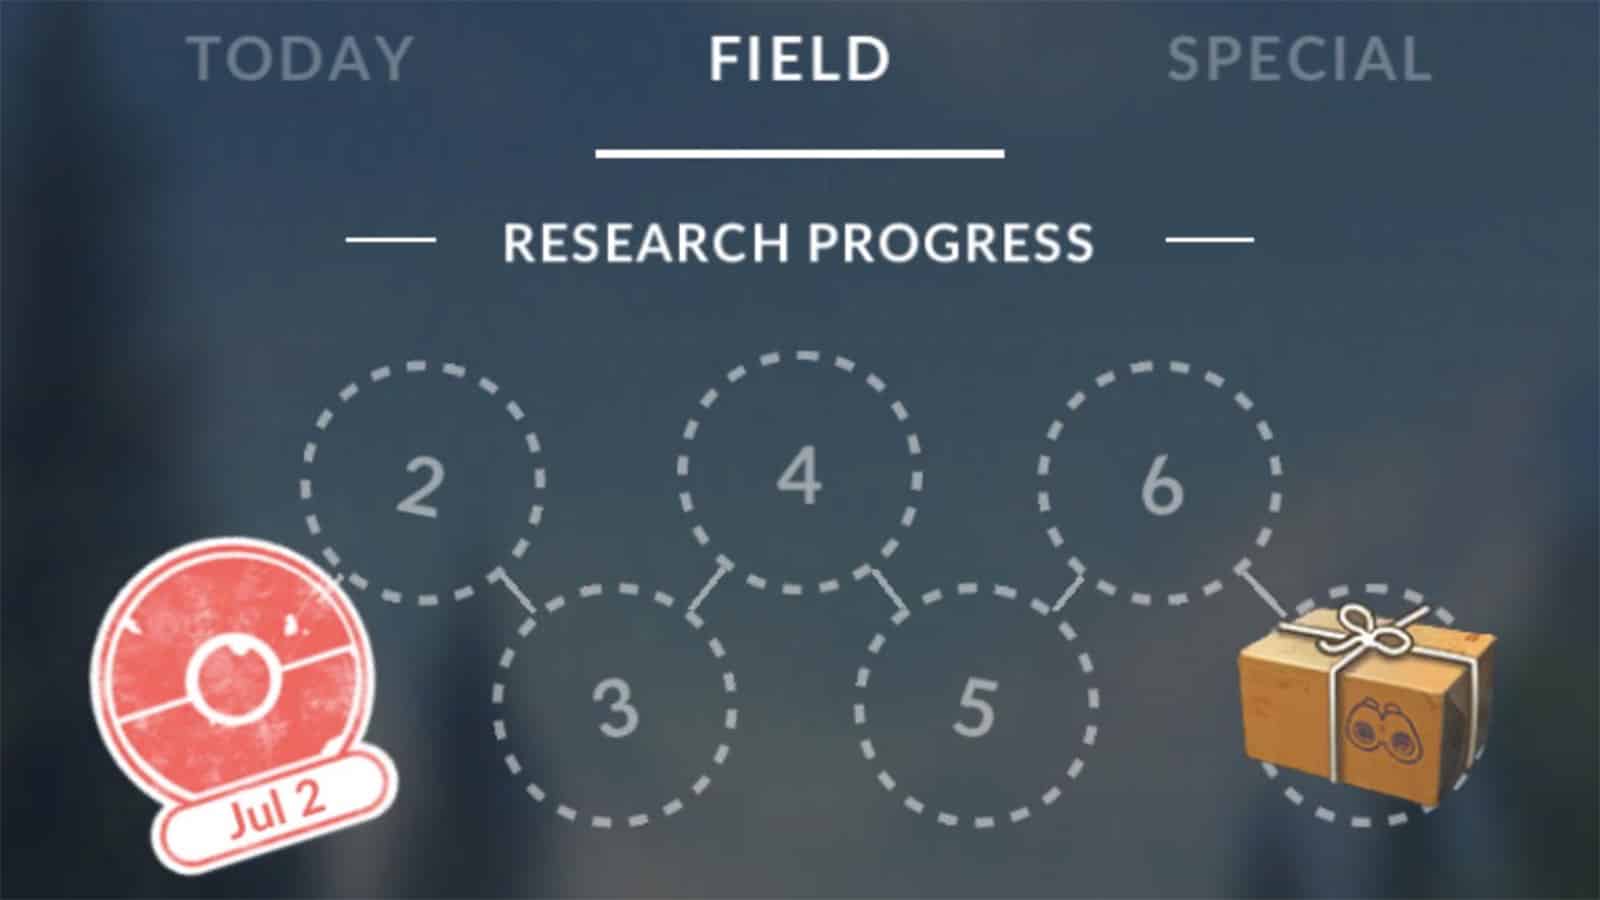 Pokémon Go December Field Research tasks and their rewards explained